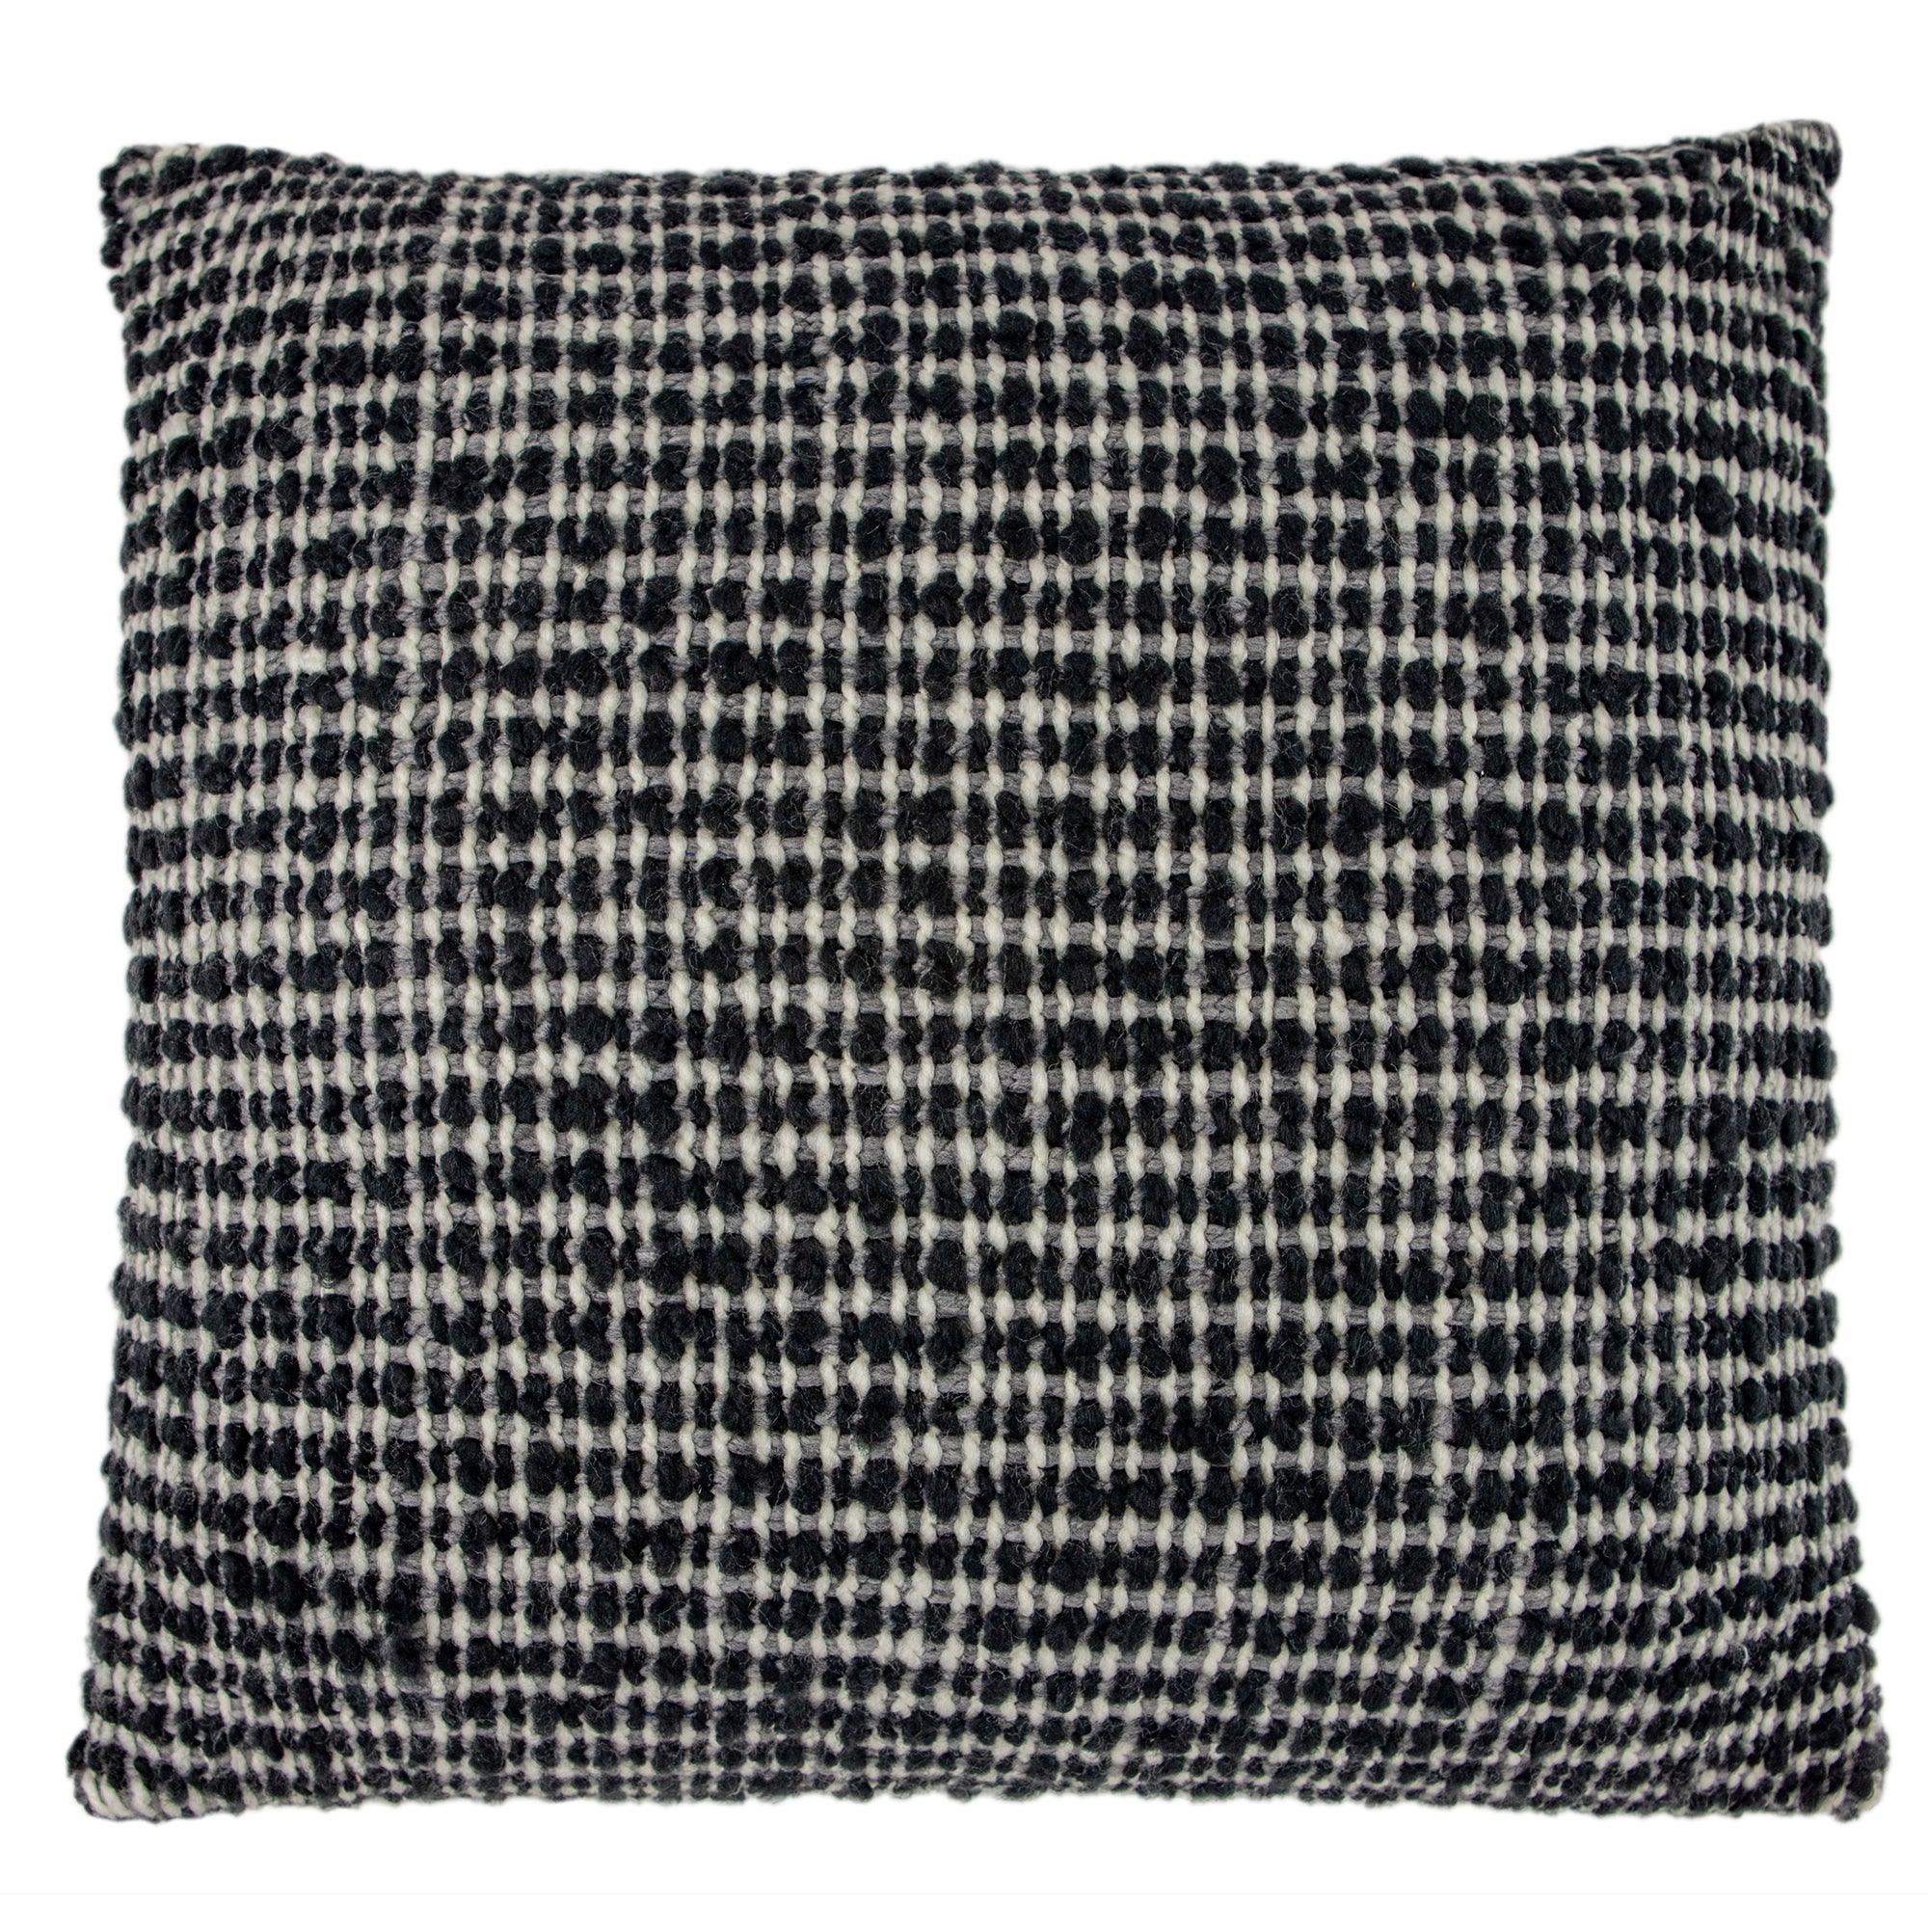 Newcastle Throw Pillow - Elegant Linen